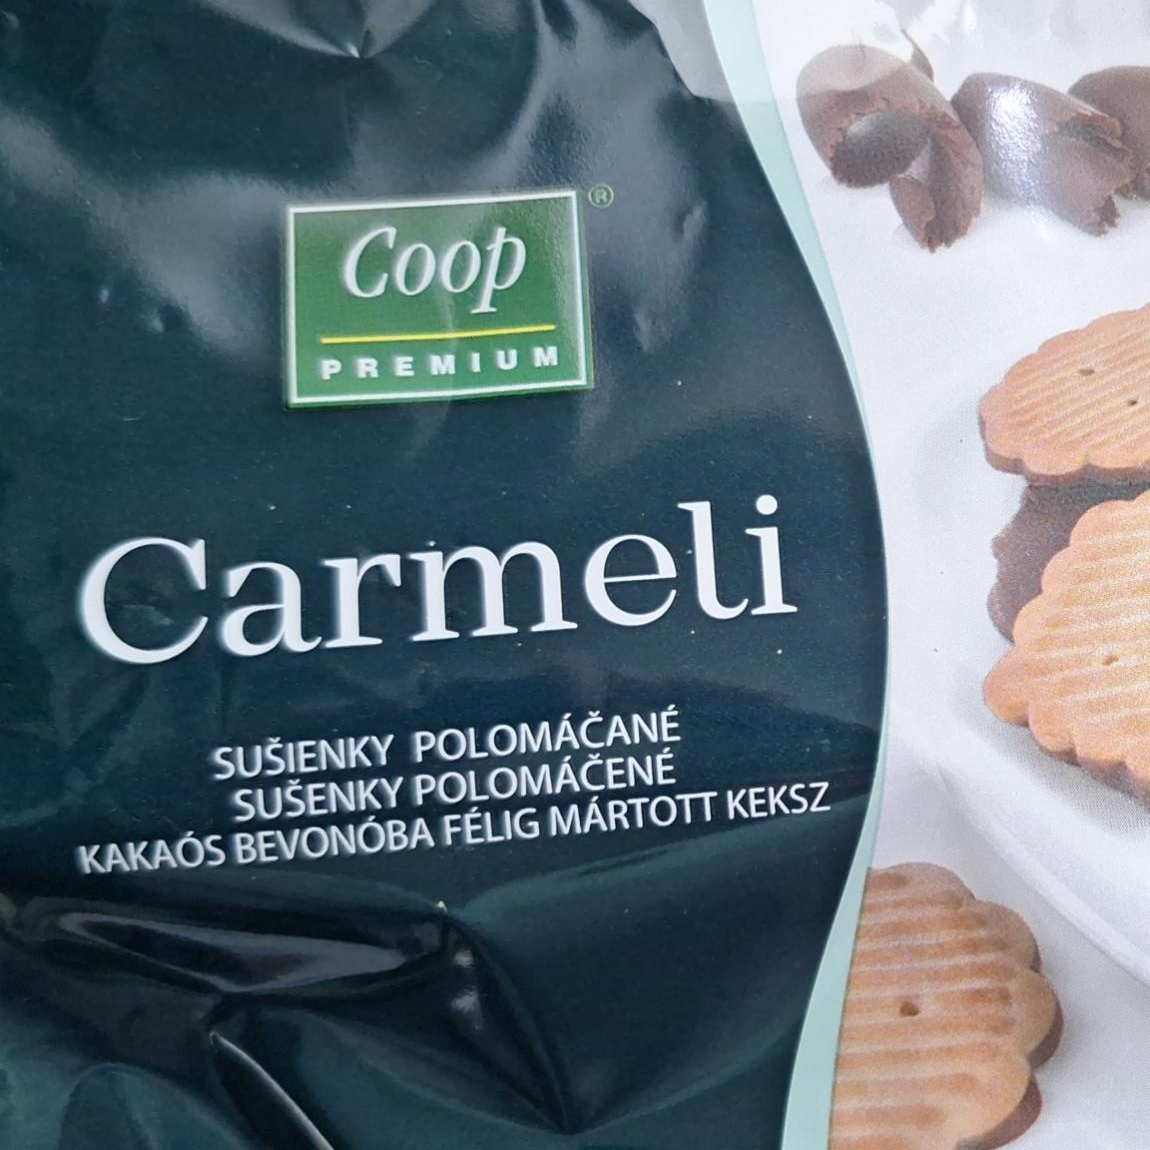 Fotografie - Carmeli sušenky polomáčené Coop Premium